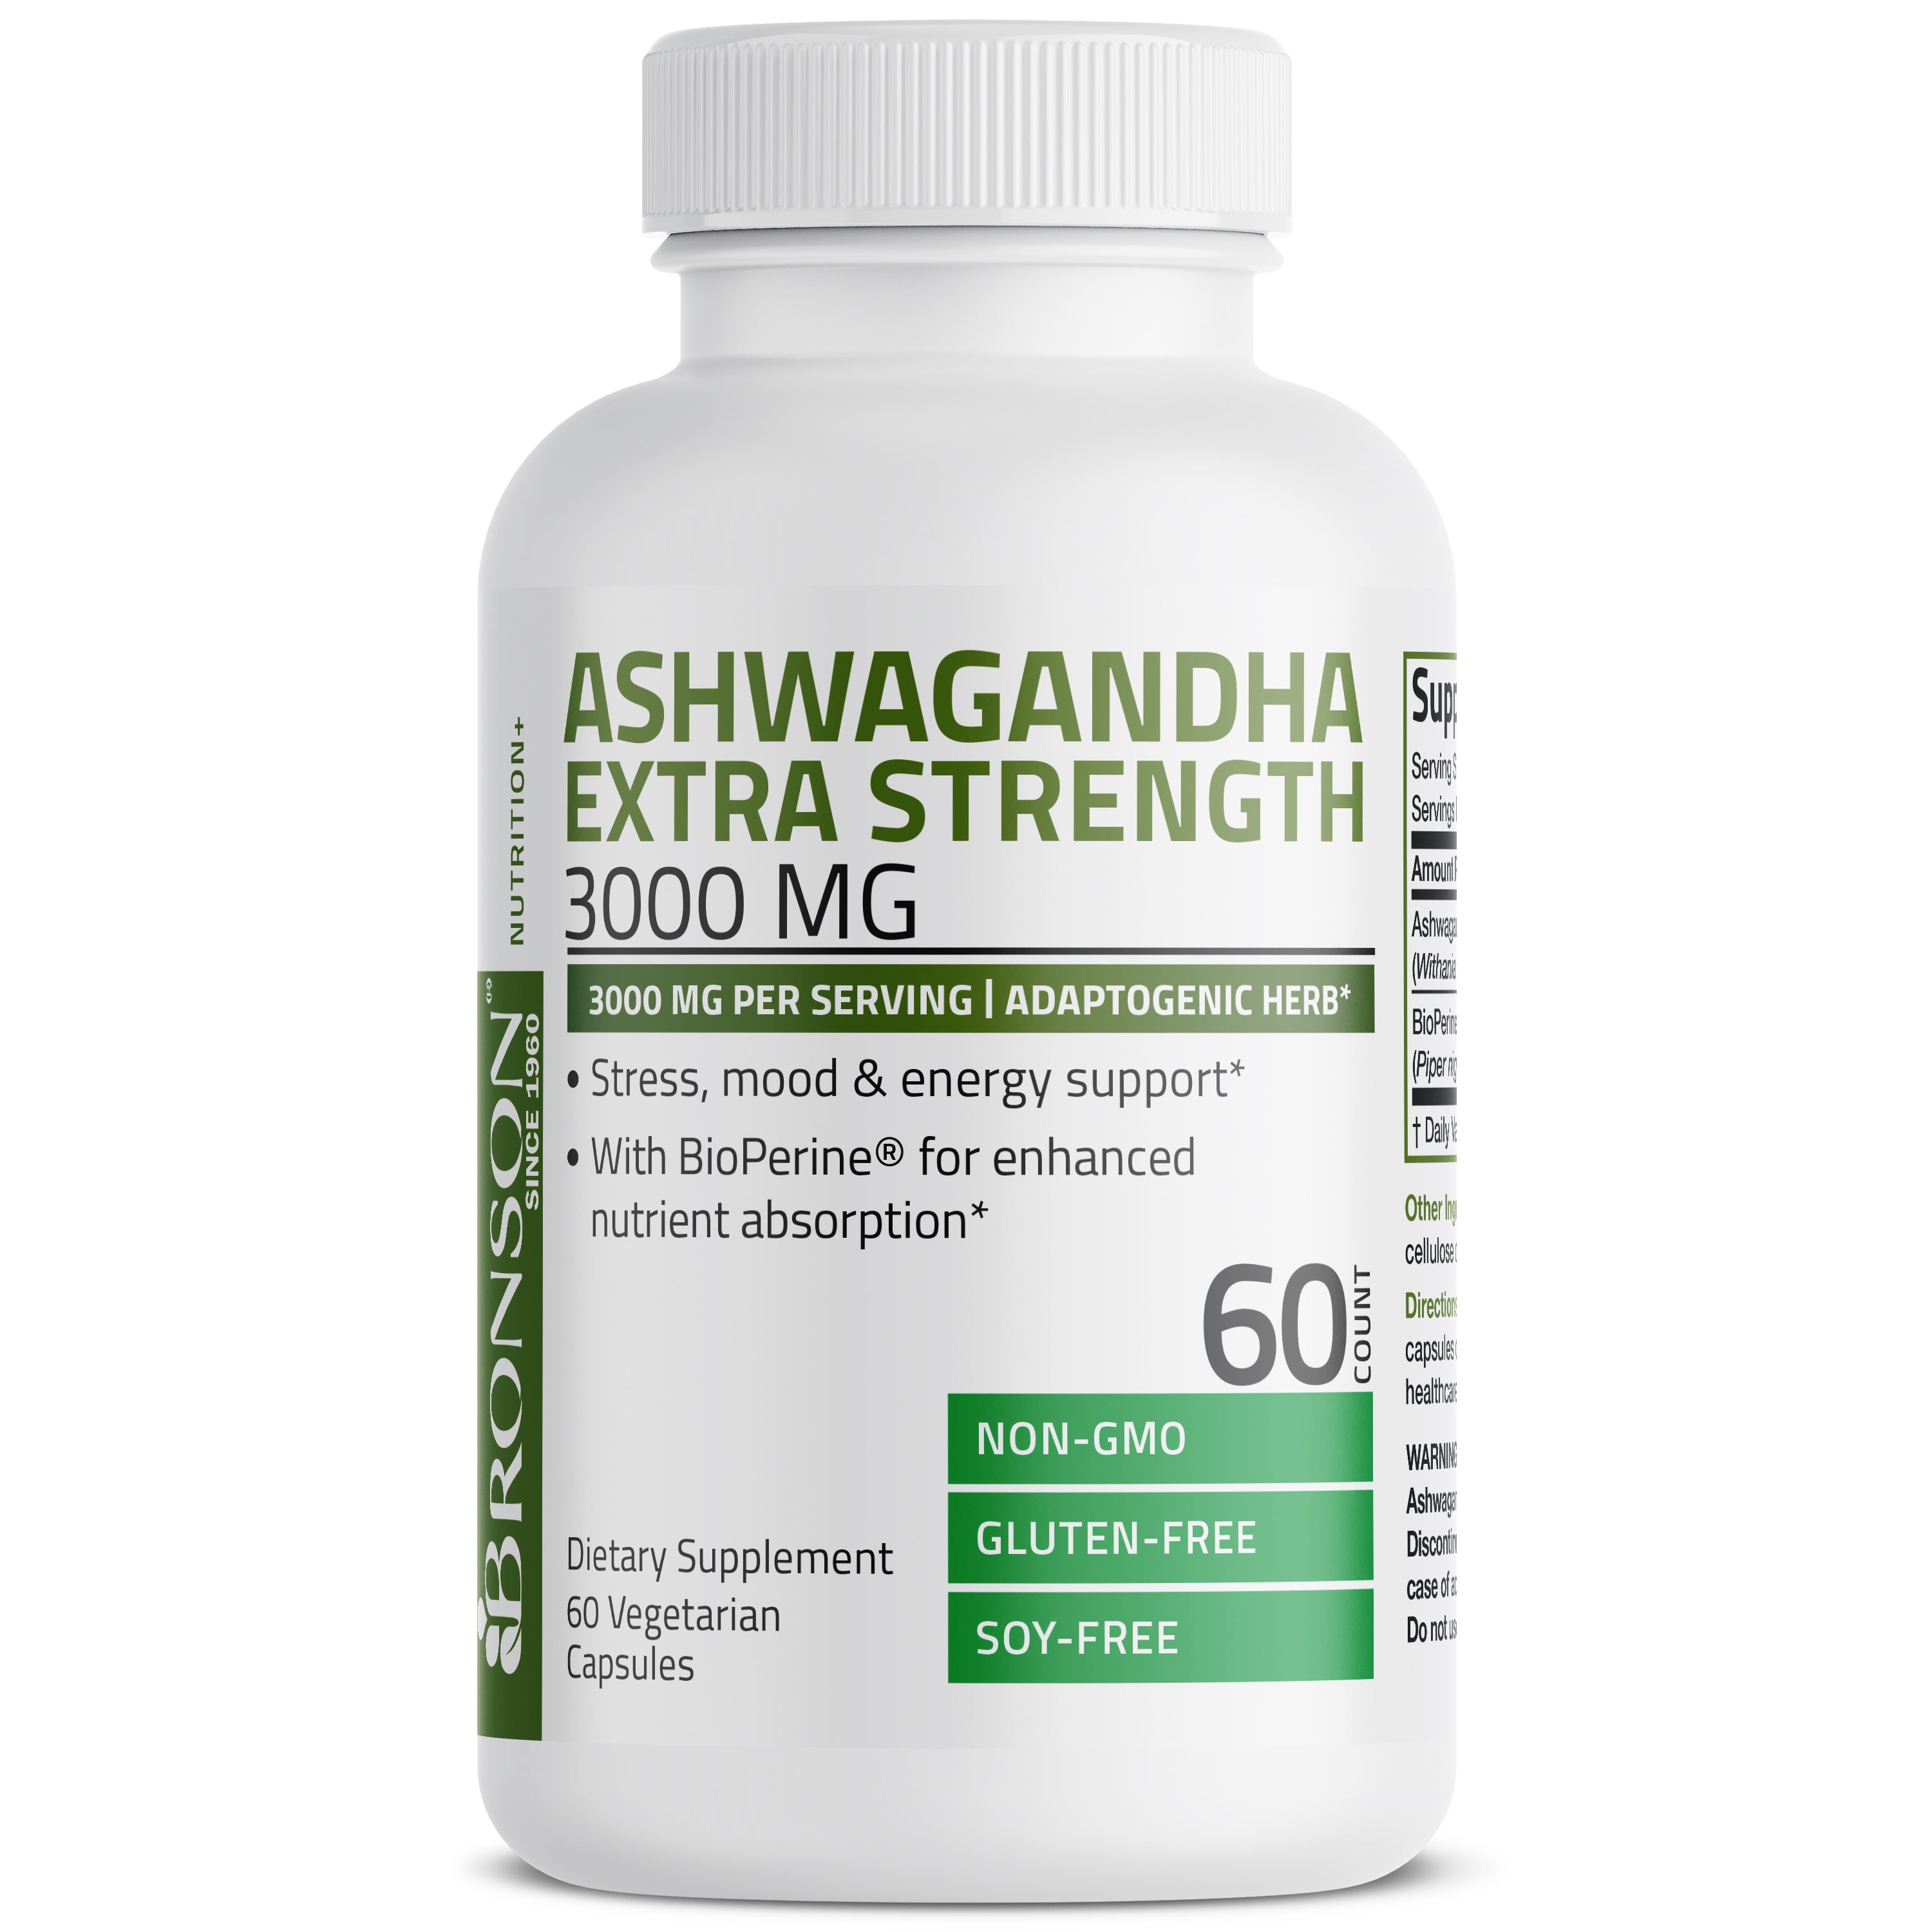 Ashwagandha Extra Strength - 3,000 mg view 3 of 6